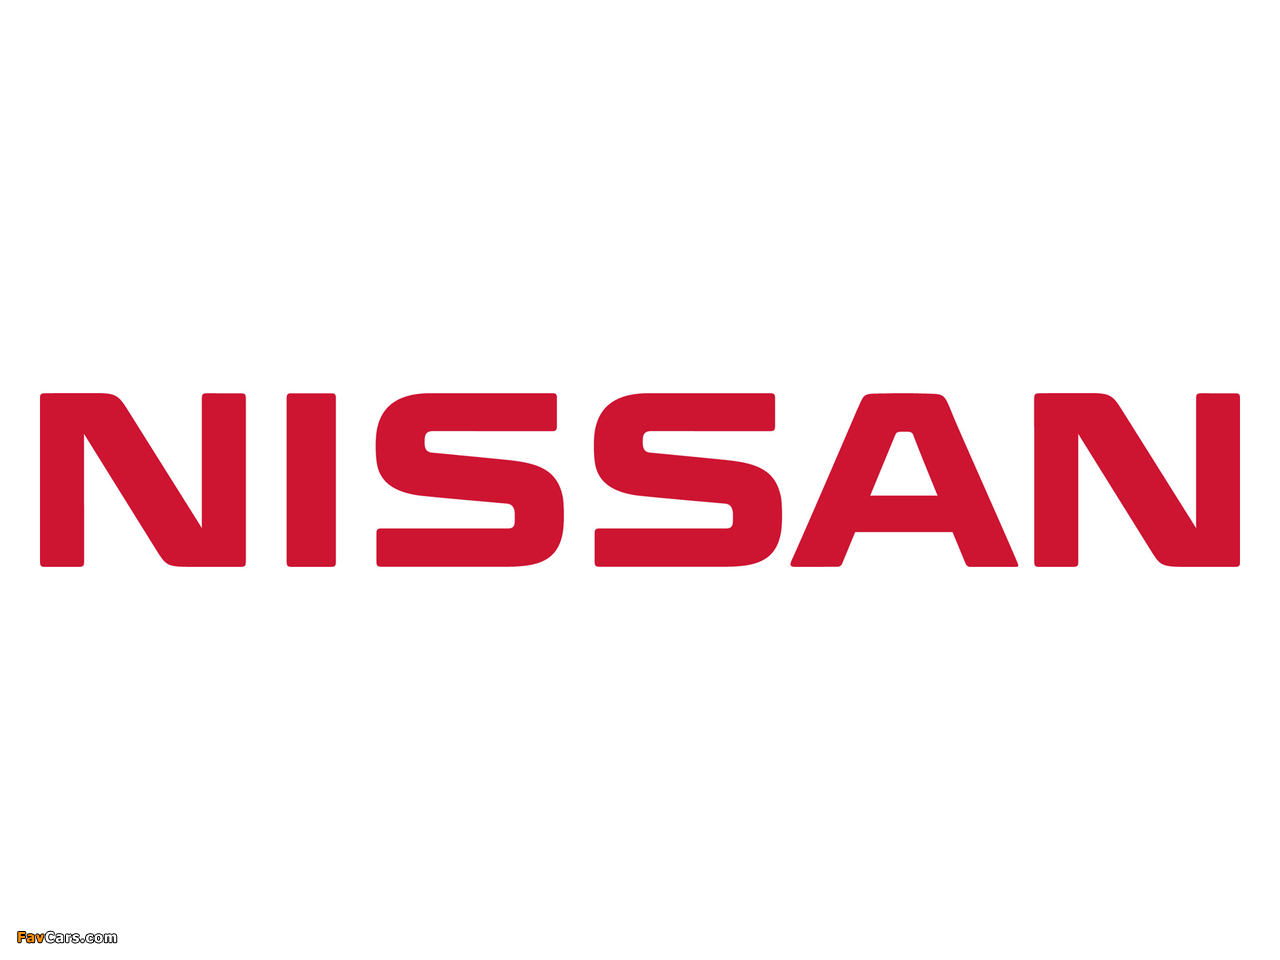 Nissan images (1280 x 960)